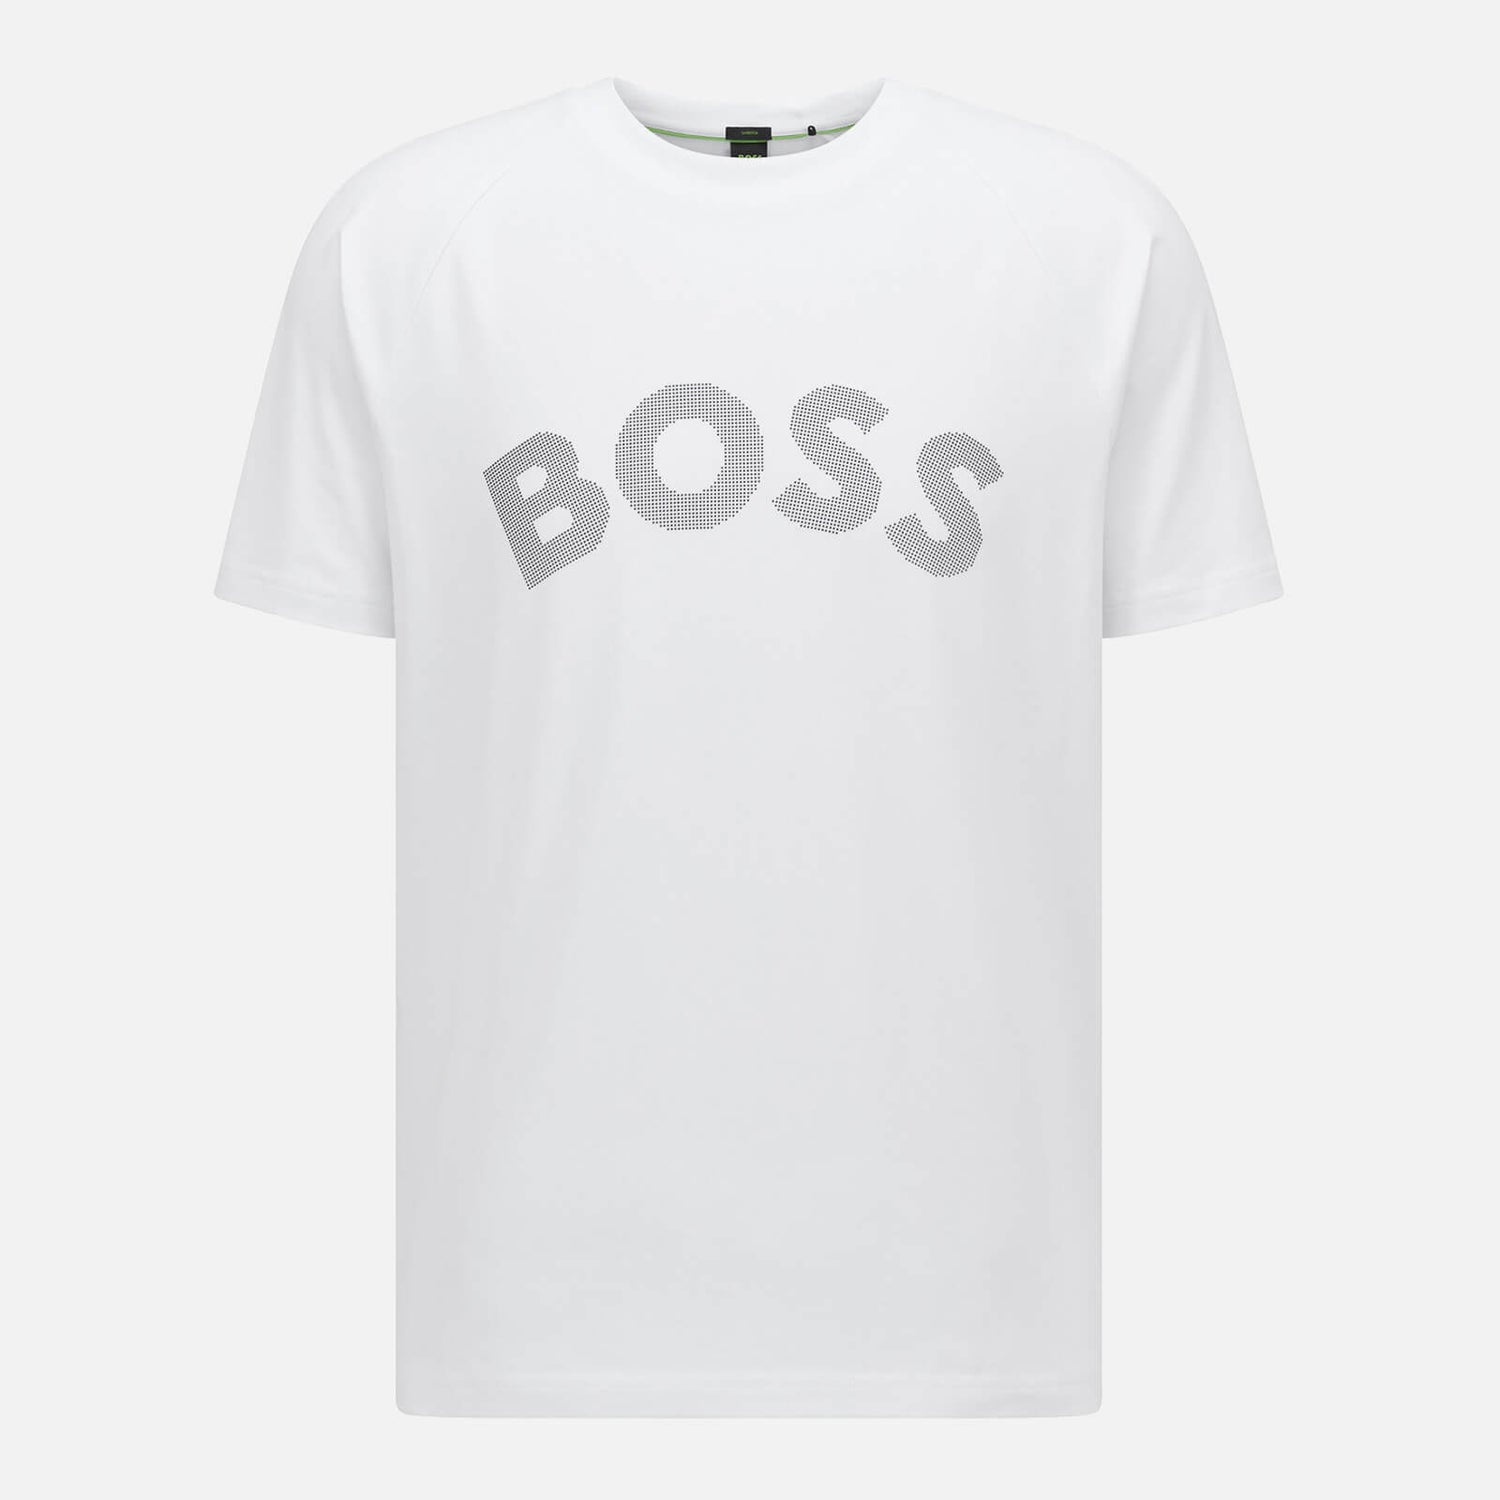 BOSS Green Men's Naps T-Shirt - White